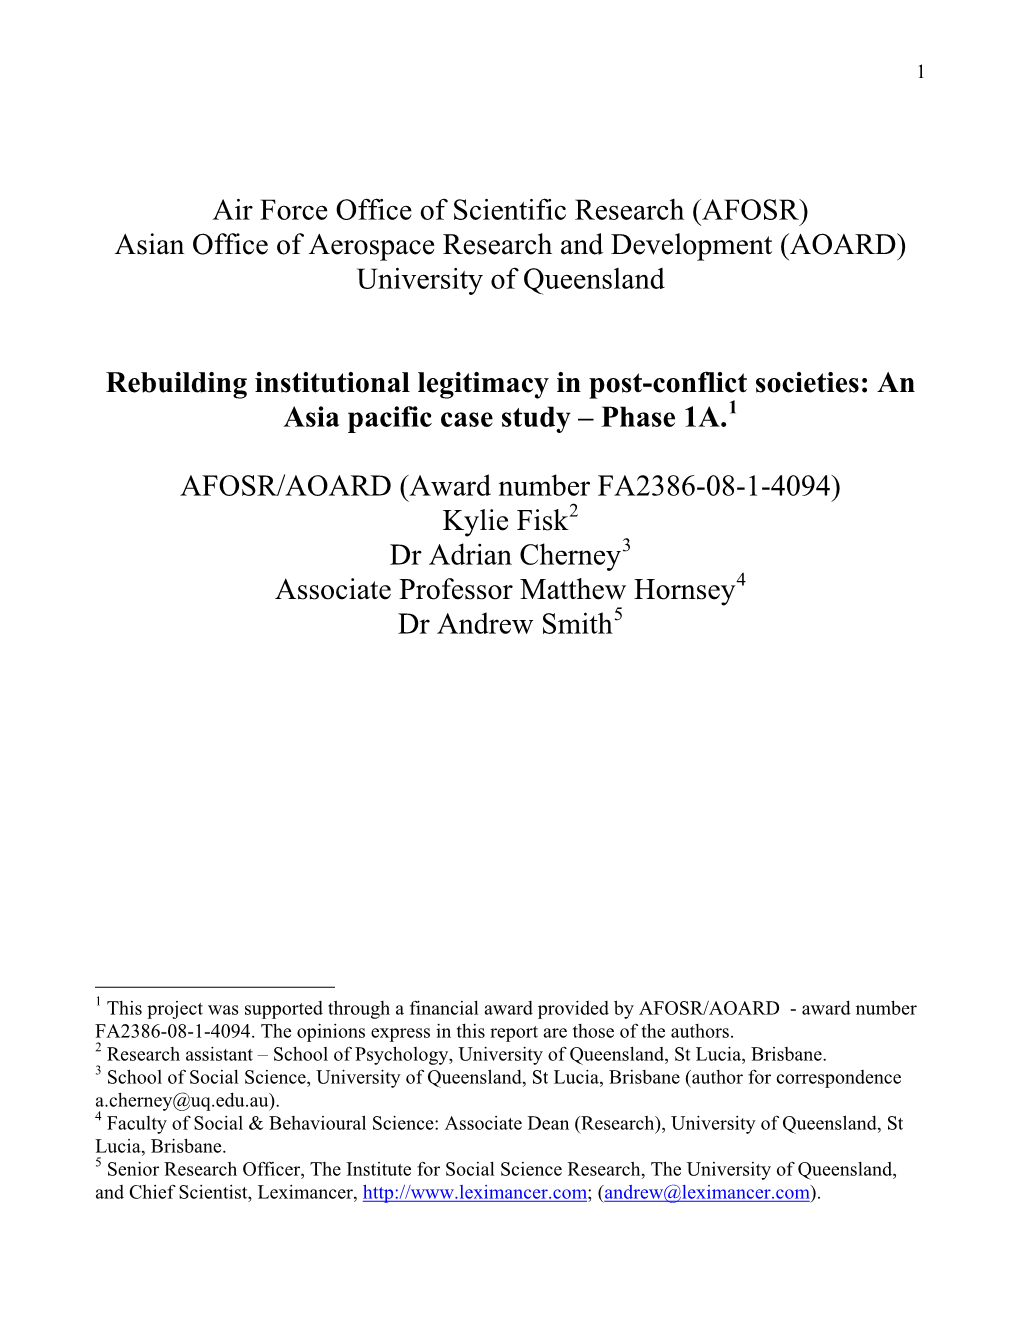 AFOSR) Asian Office of Aerospace Research and Development (AOARD) University of Queensland